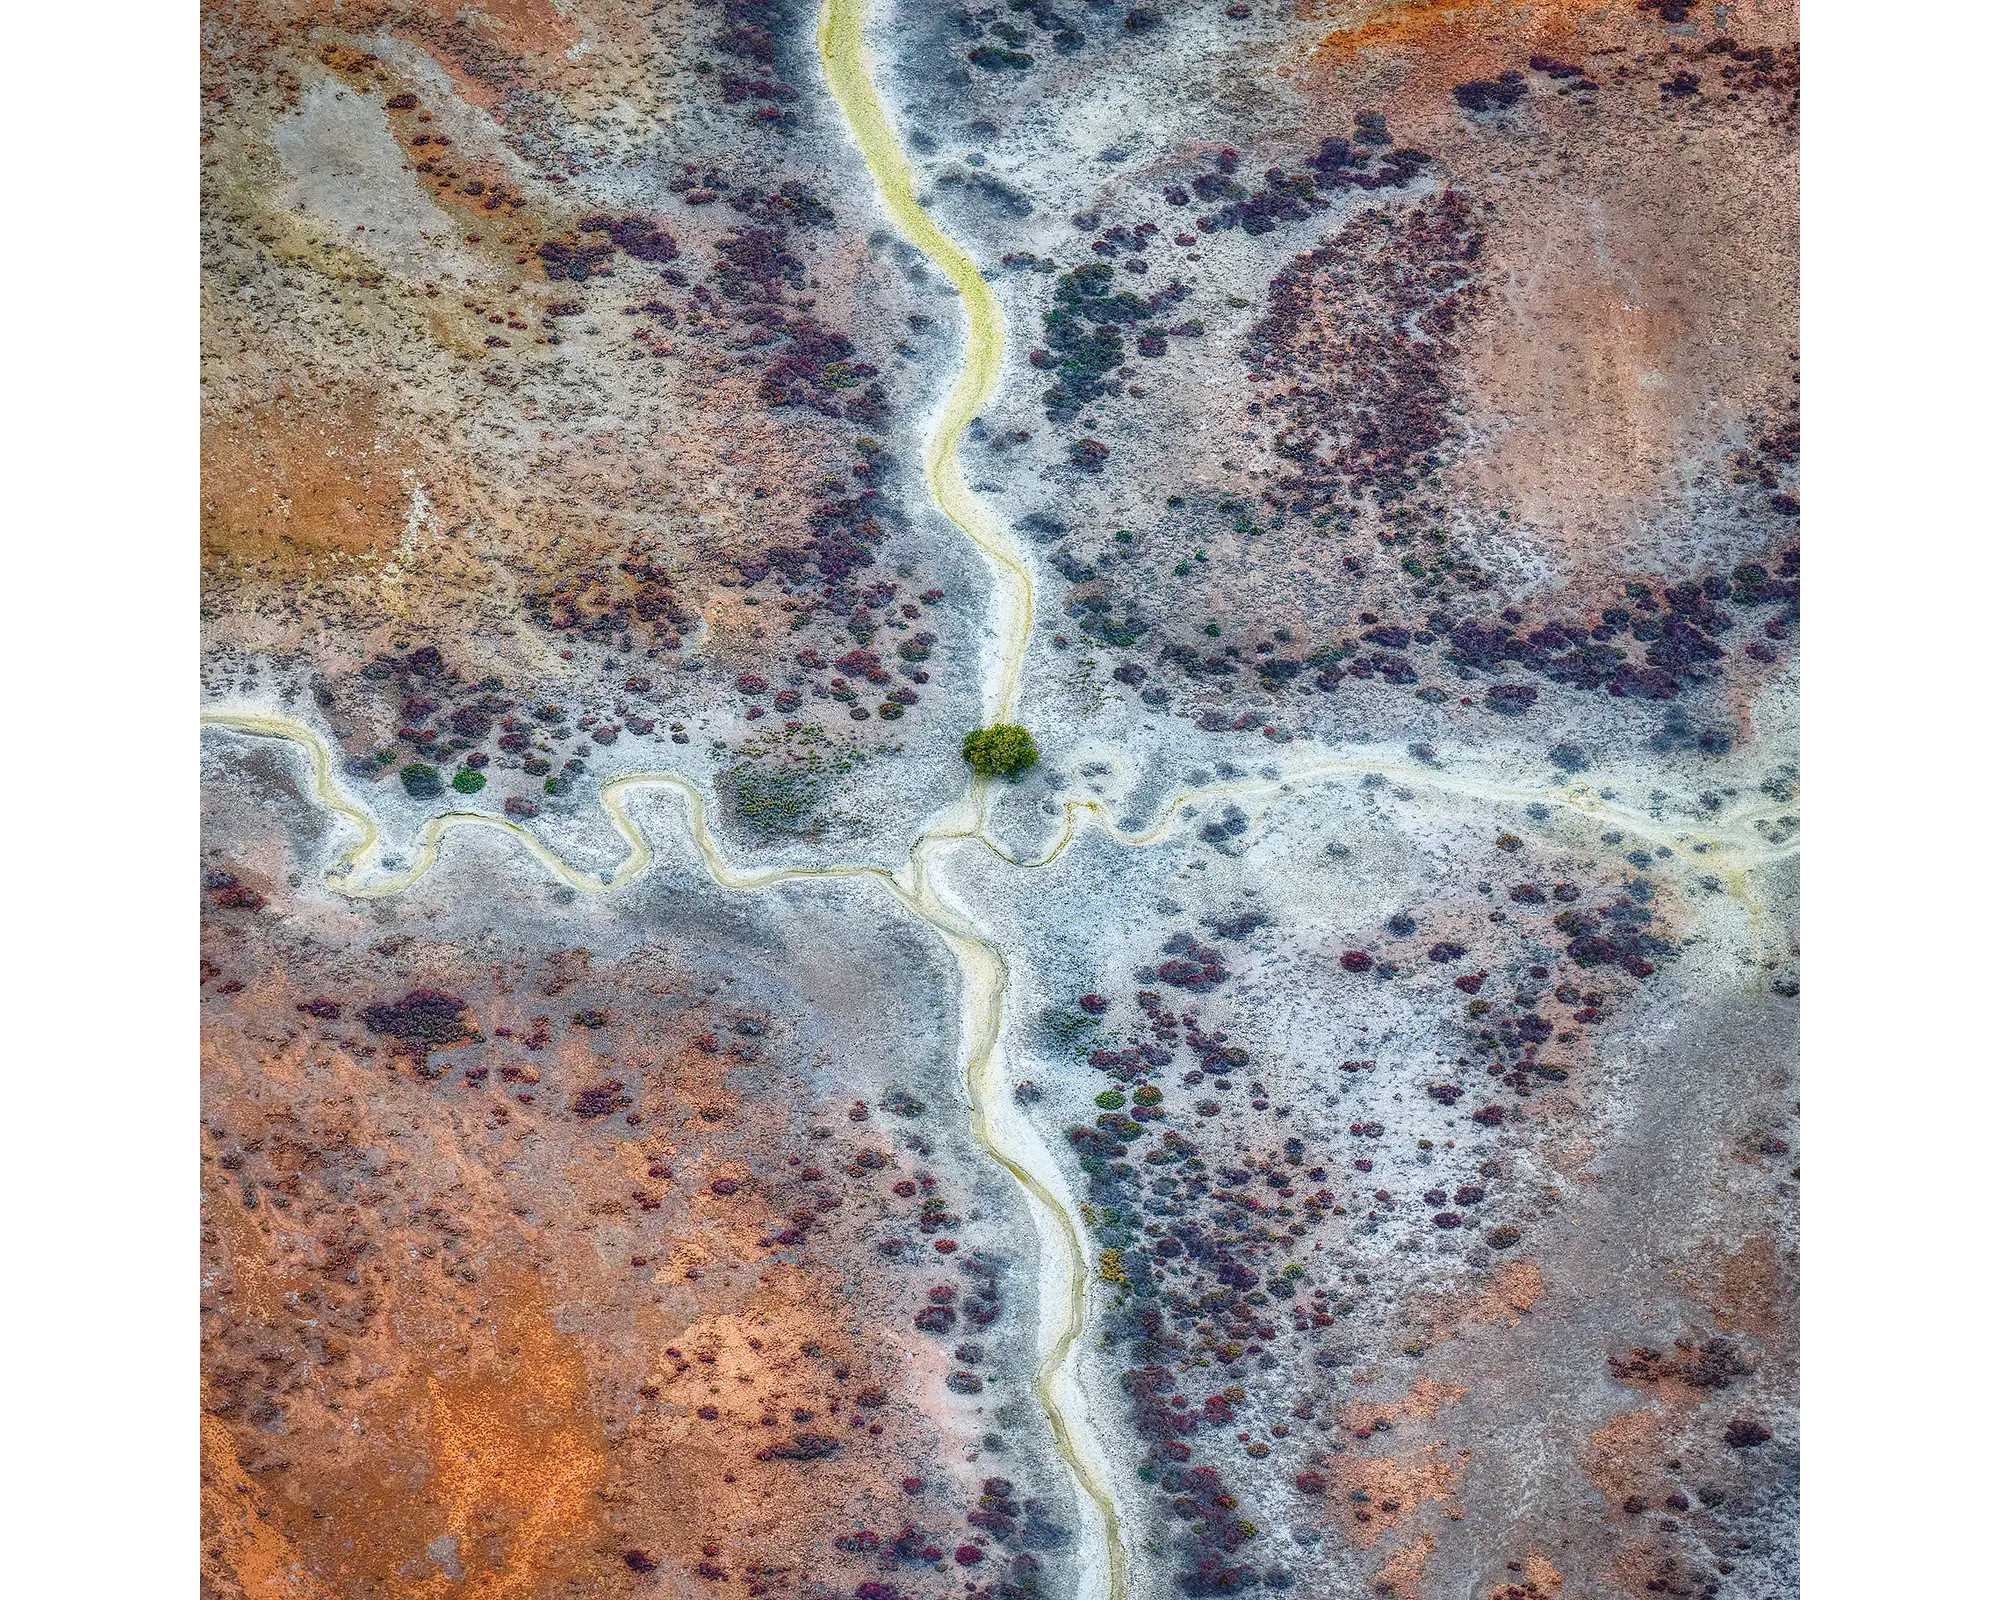 Crossroads - Abstract patterns, Roebuck Plains, The Kimberley, Western Australia.